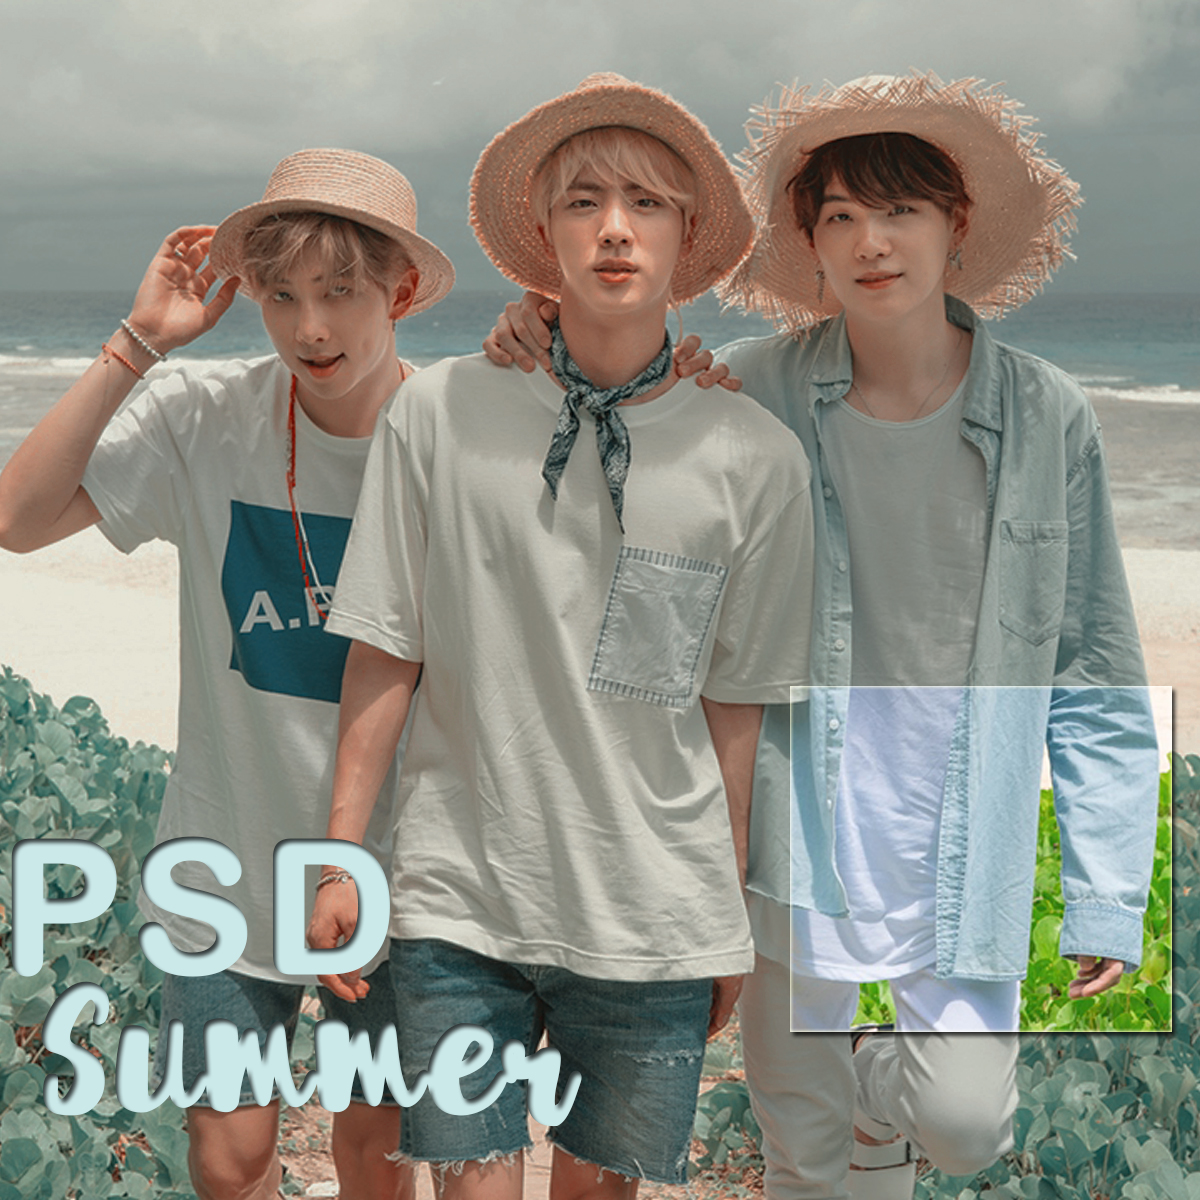 Download Summer Psd By Yourhopeangel On Deviantart PSD Mockup Templates